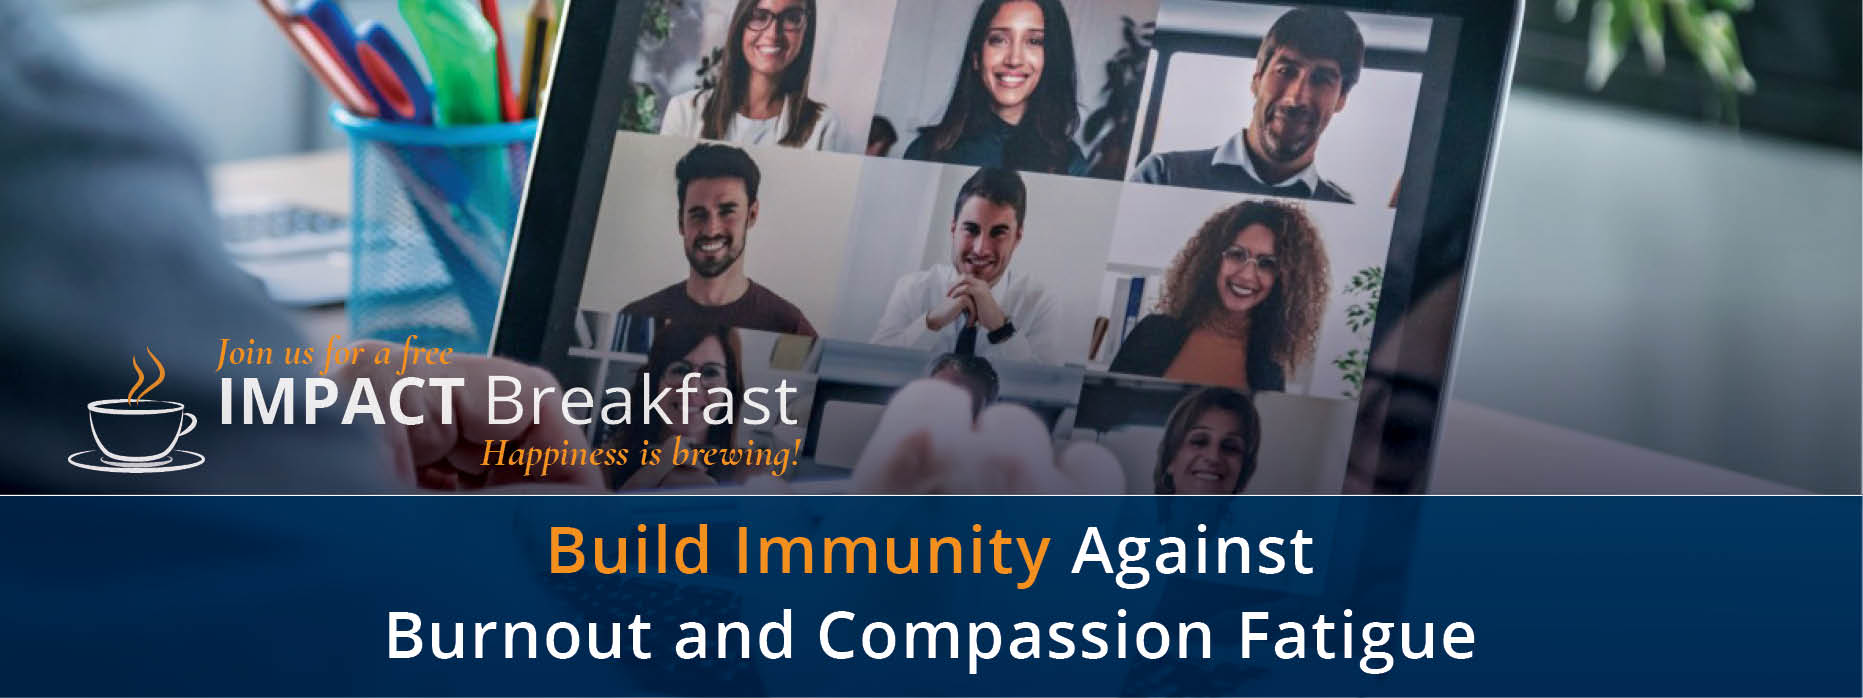 Build Immunity Against Burnout and Compassion Fatigue